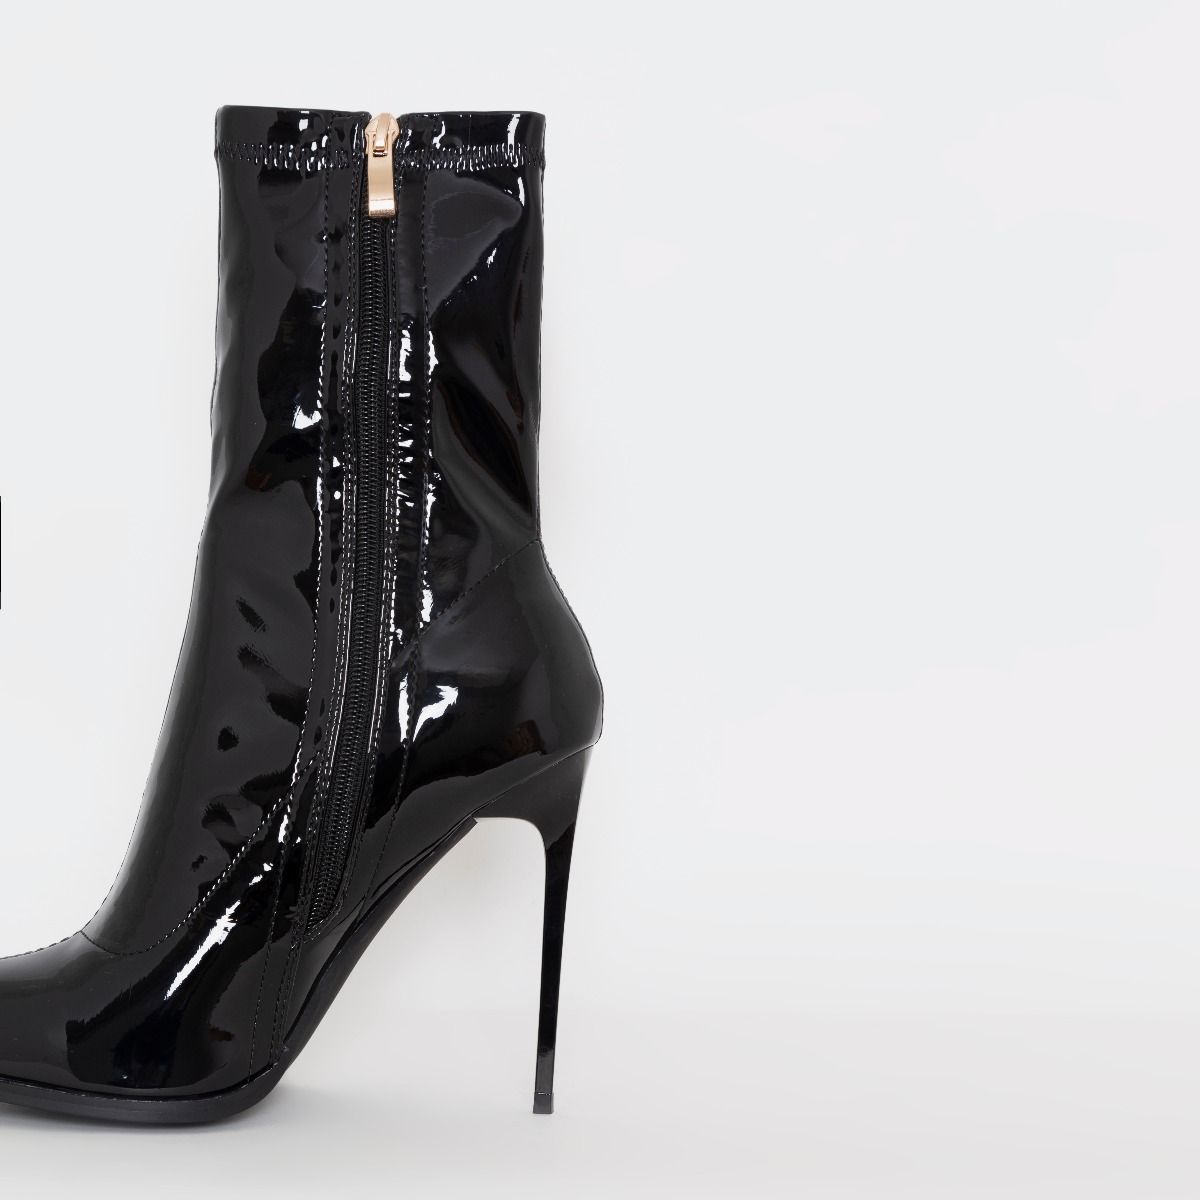 Stefania Black Patent Metal Toe Cap Stiletto Ankle Boots | SIMMI London